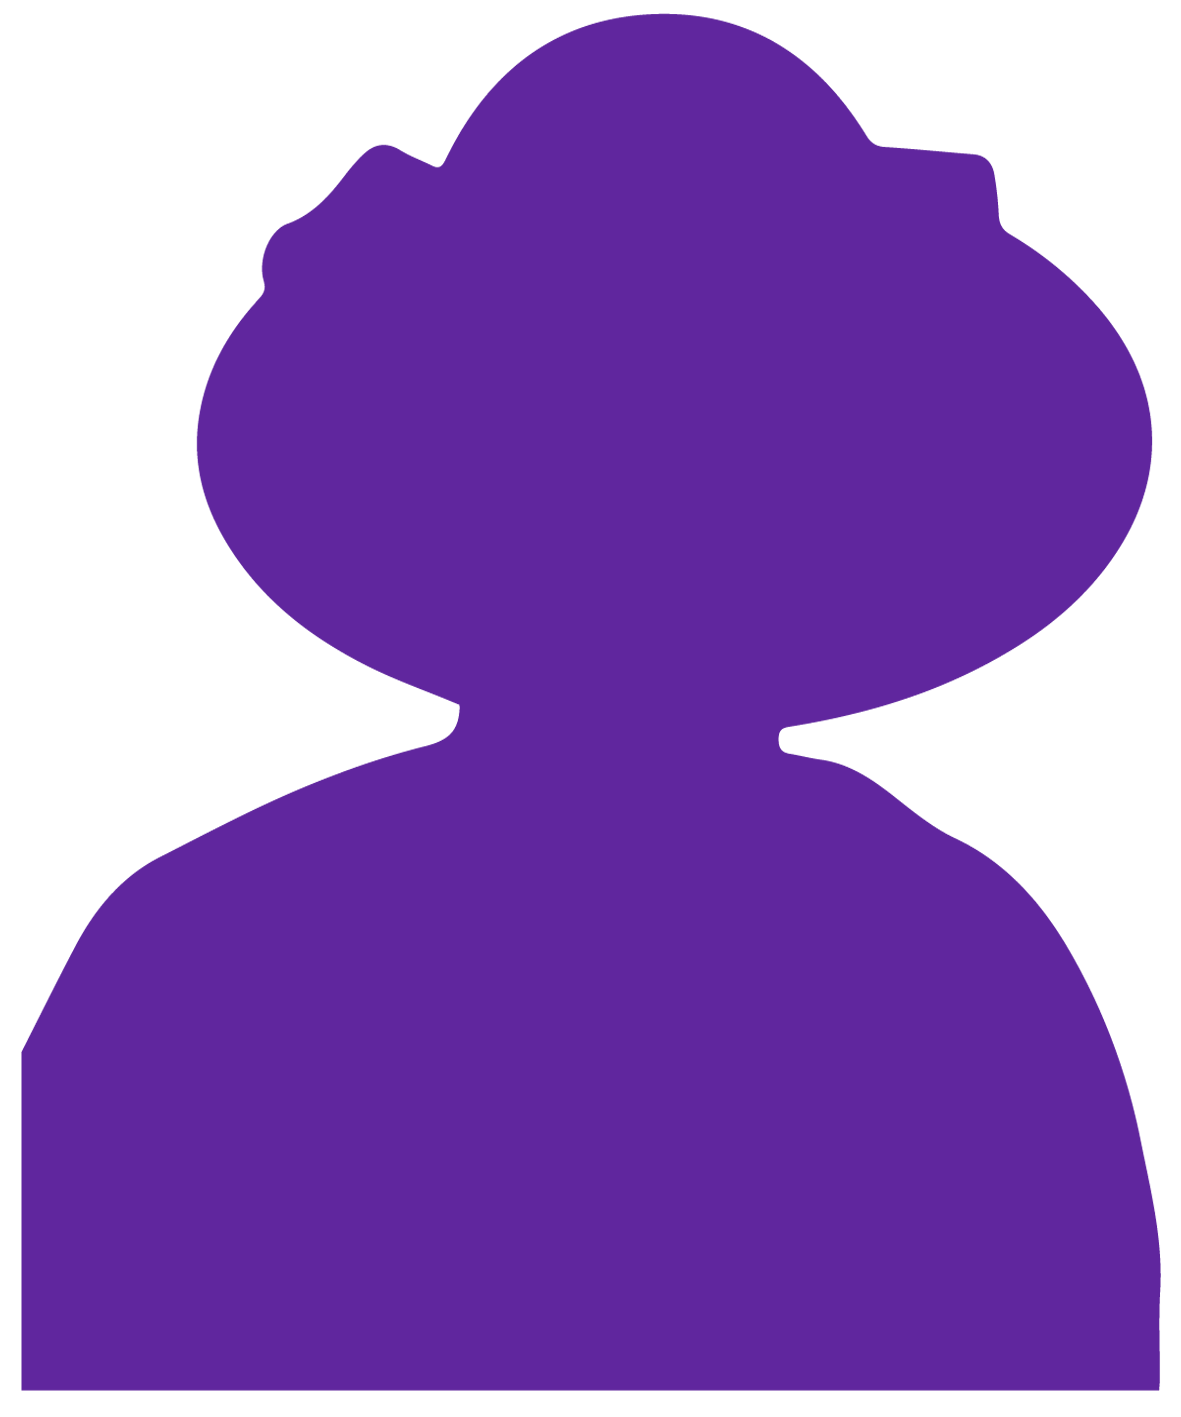 Purple silhouette of Maude Edwards